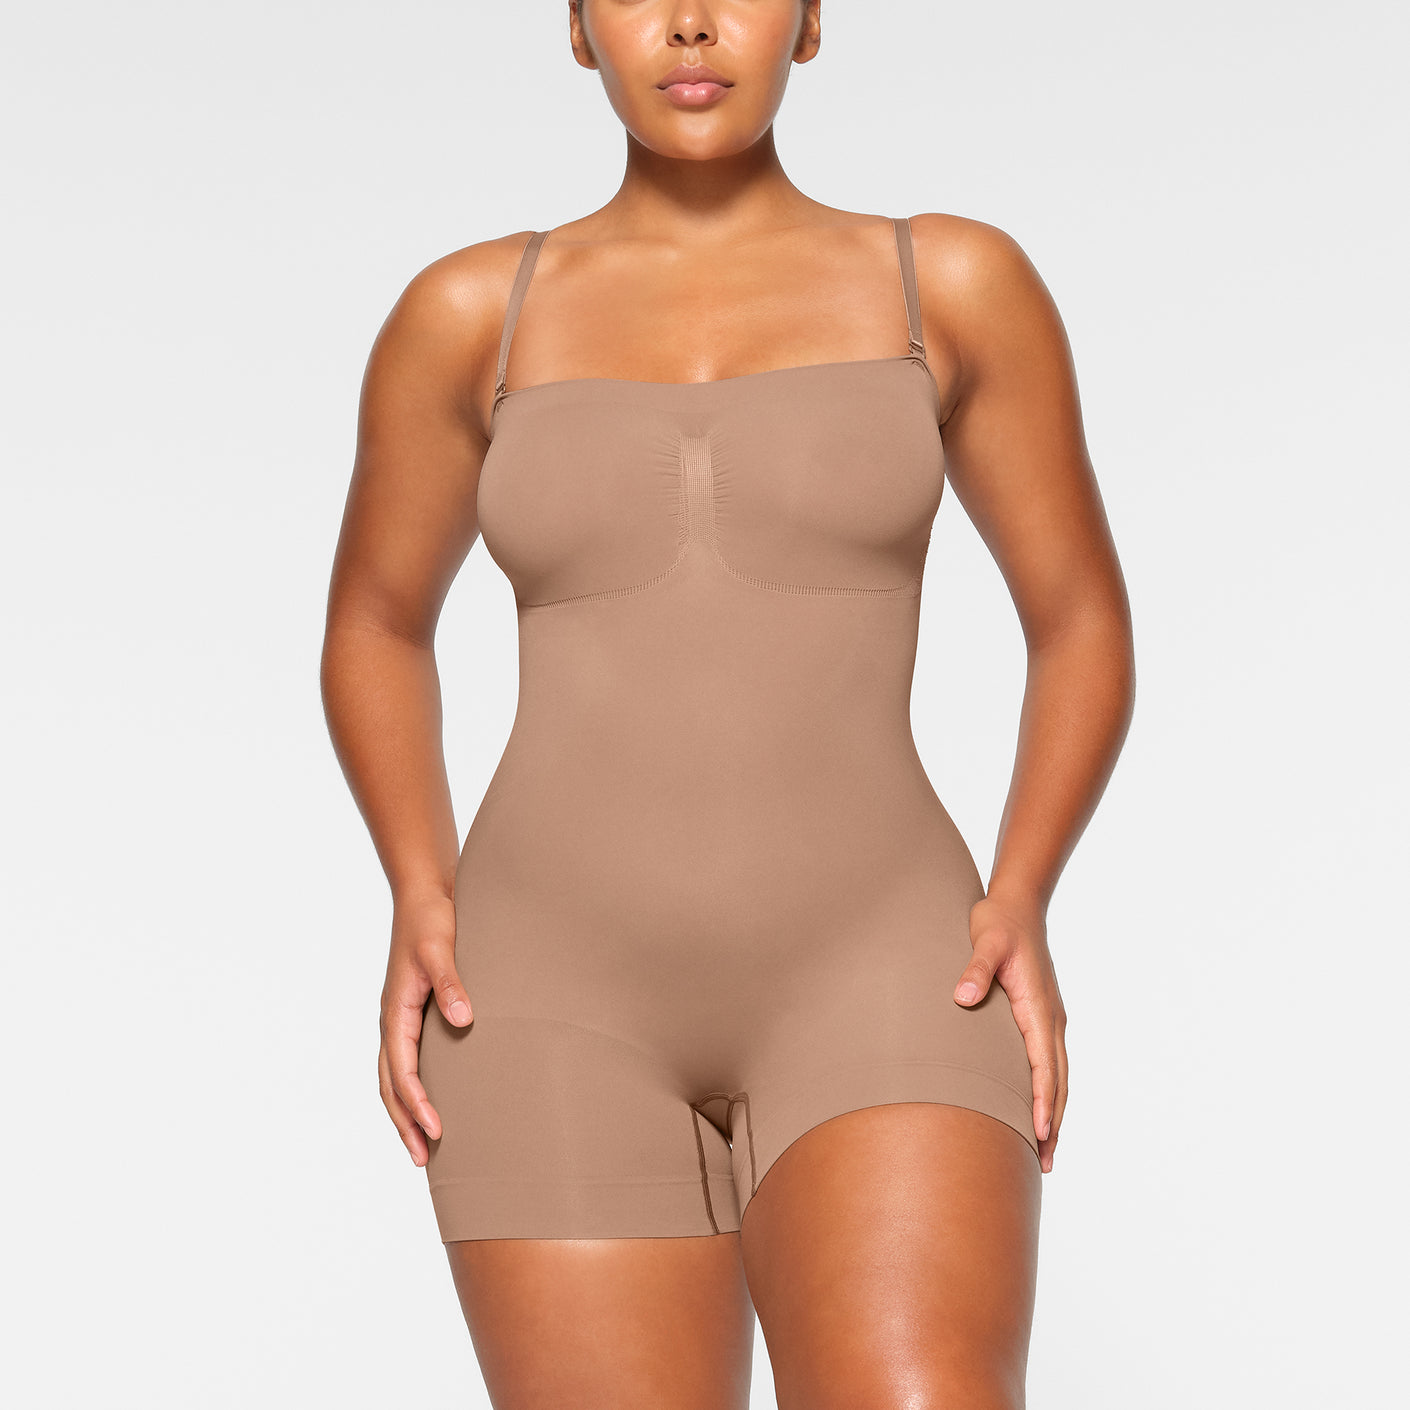  SHAPERX 2 Pieces Strapless Shortie Bodysuit for Women